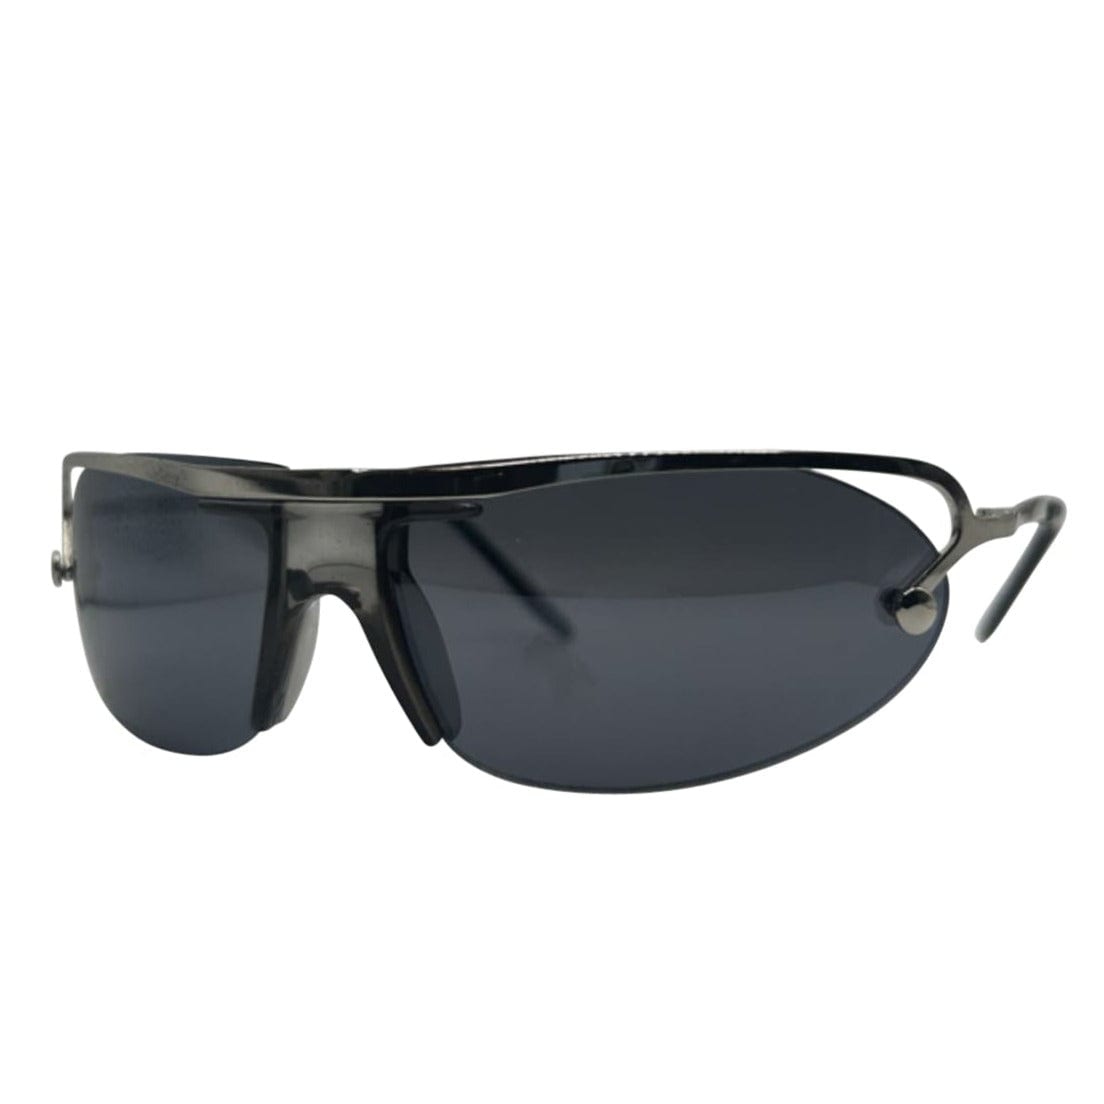 ENTERPRISE Silver Grey/Super Dark Sports Sunglasses